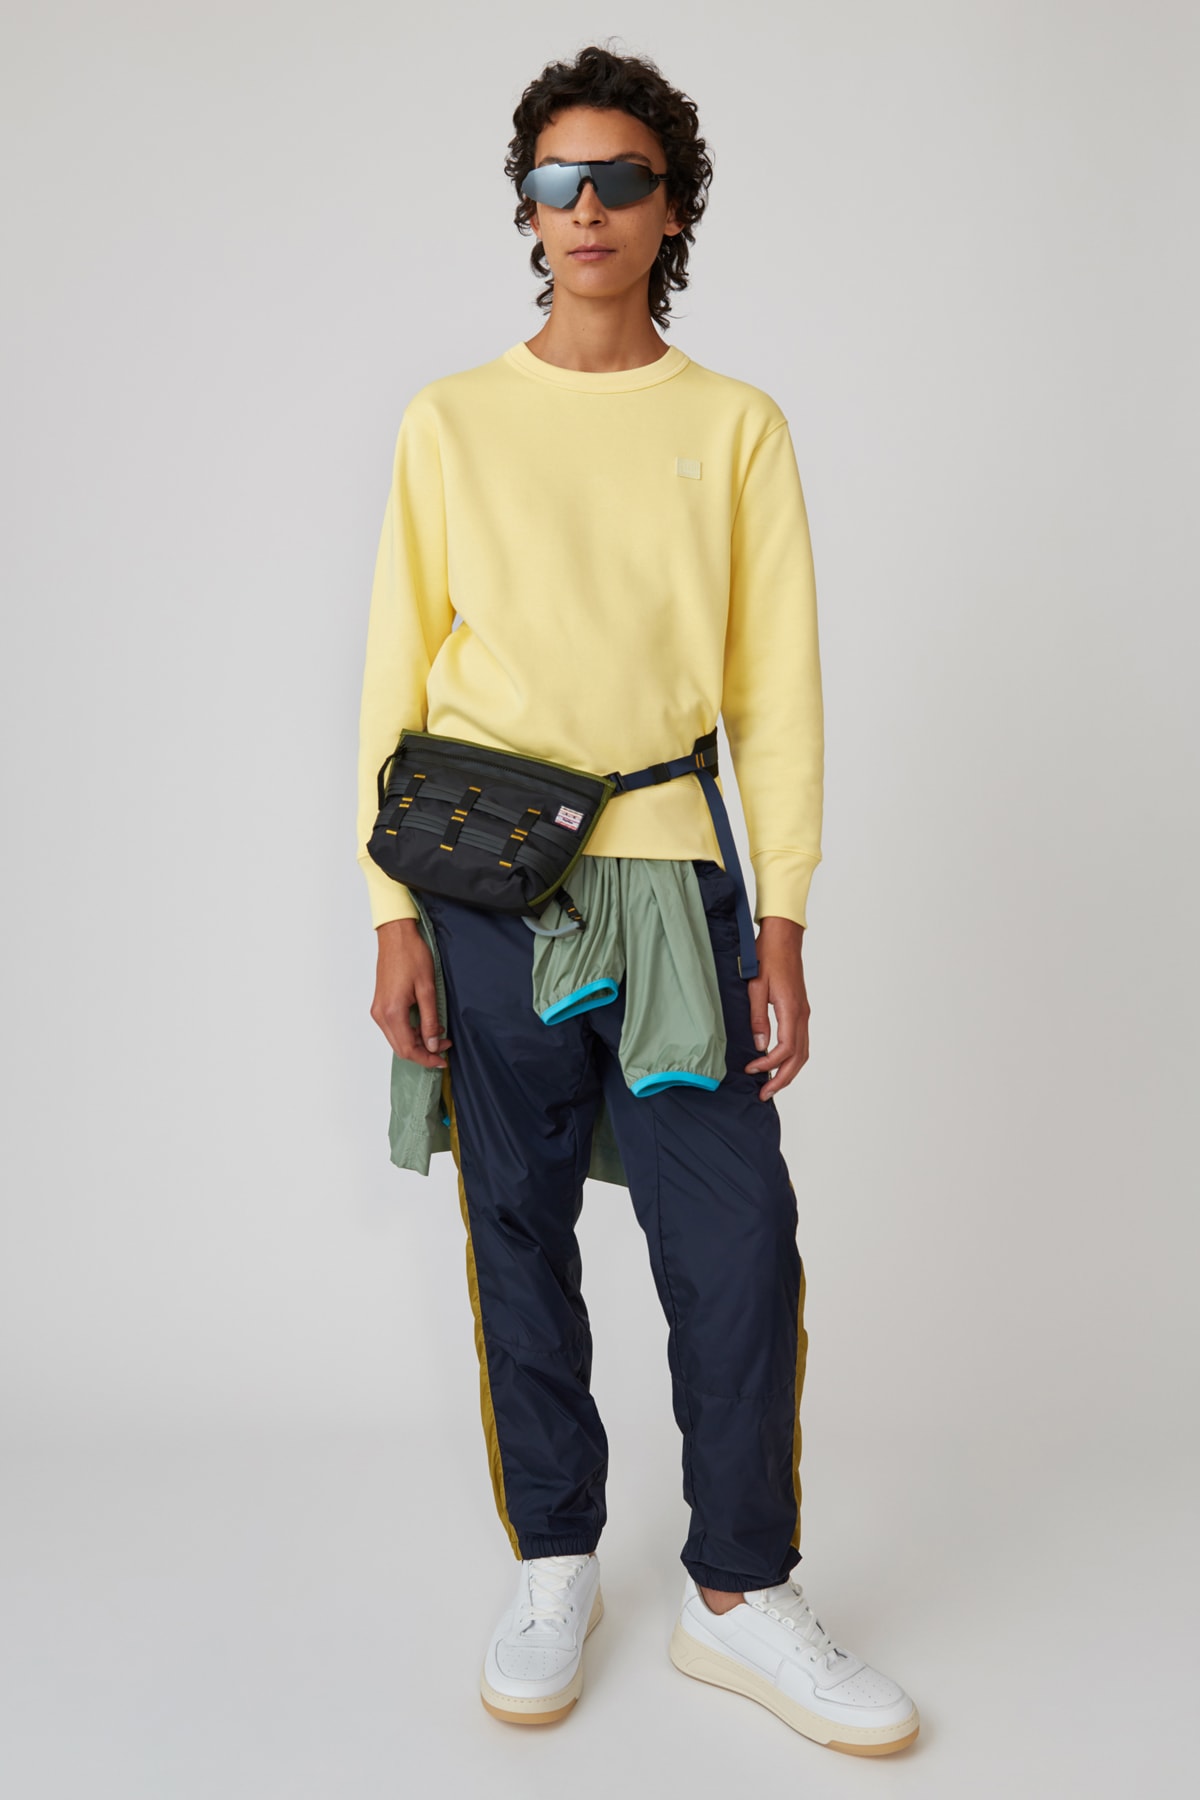 Acne Studios Spring/Summer 2019 Face Collection Sweatshirt Yellow Pants Black